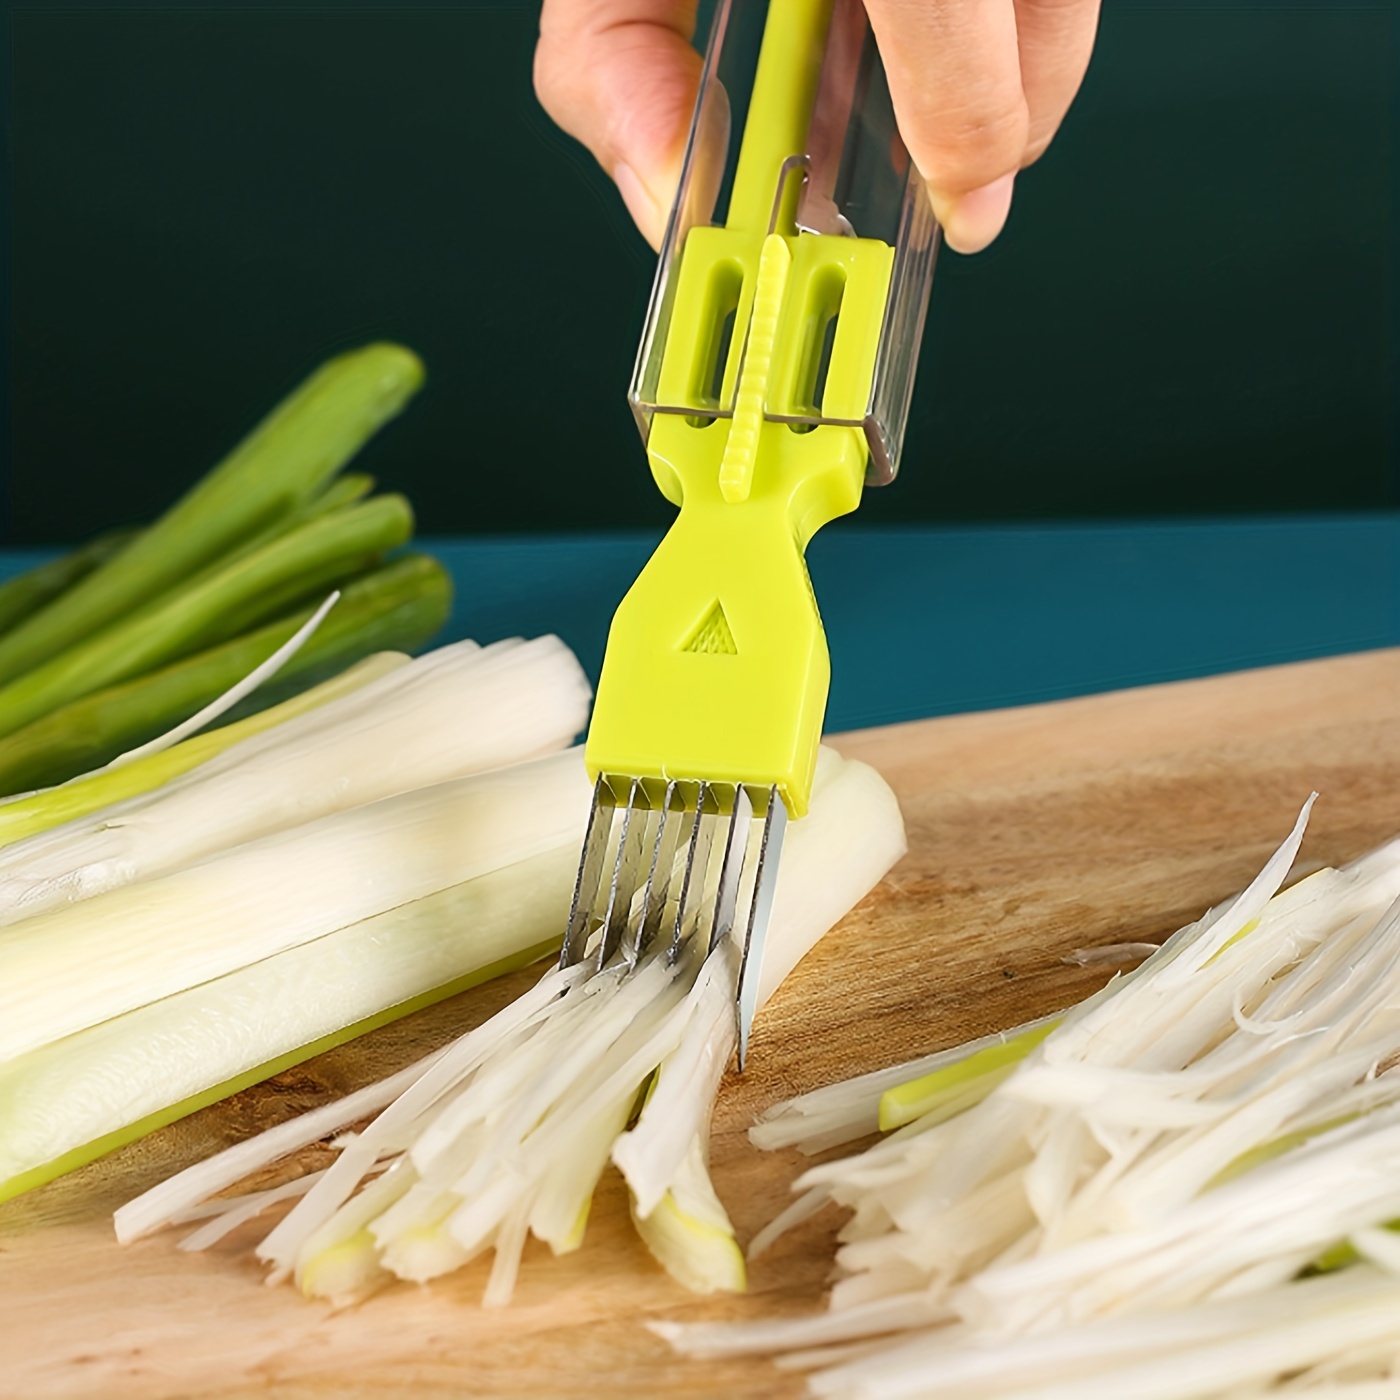 How to shred green onion using a shredding tool 